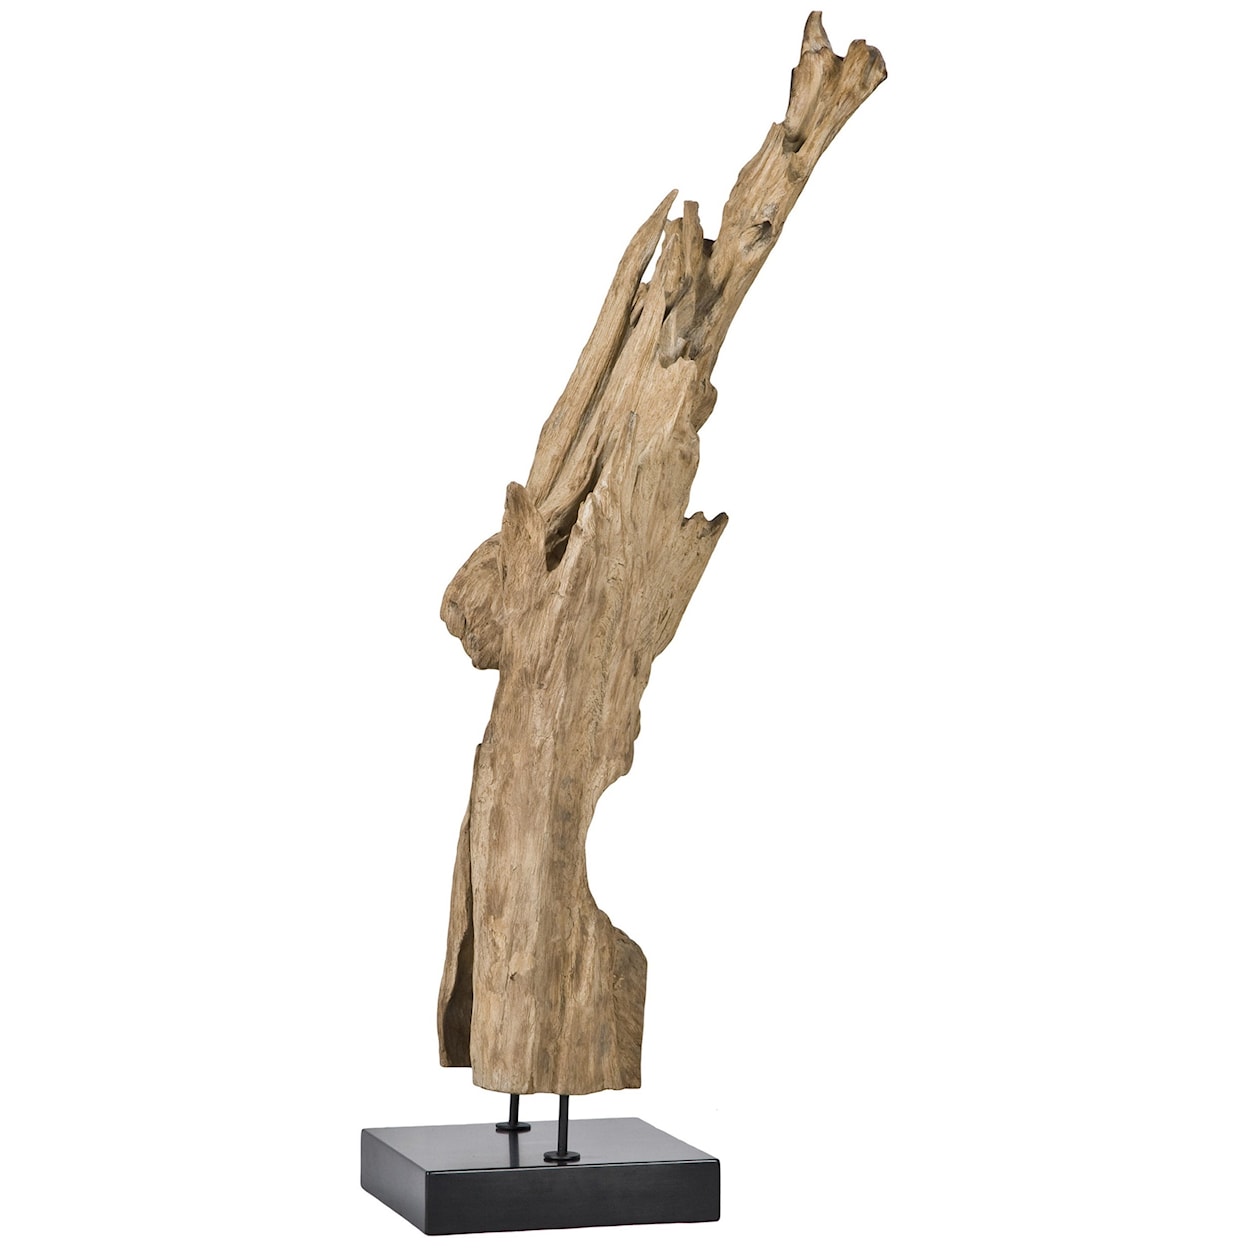 Moe's Home Collection Sculptures Natural Teak Wood Sculpture